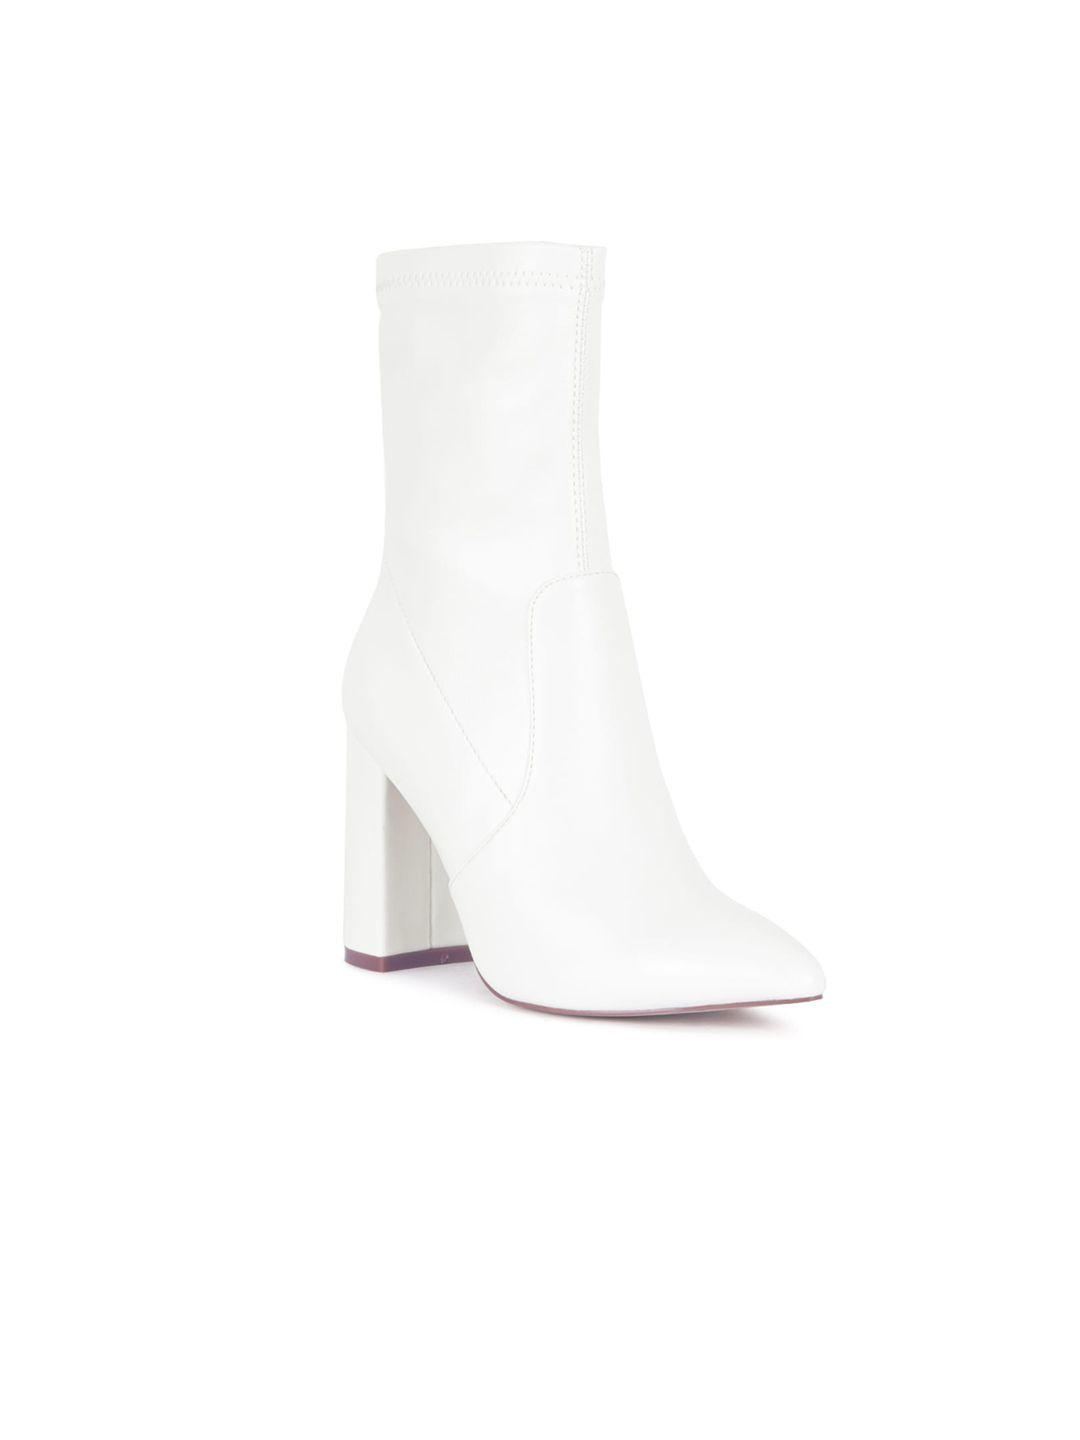 london rag white block heeled boots